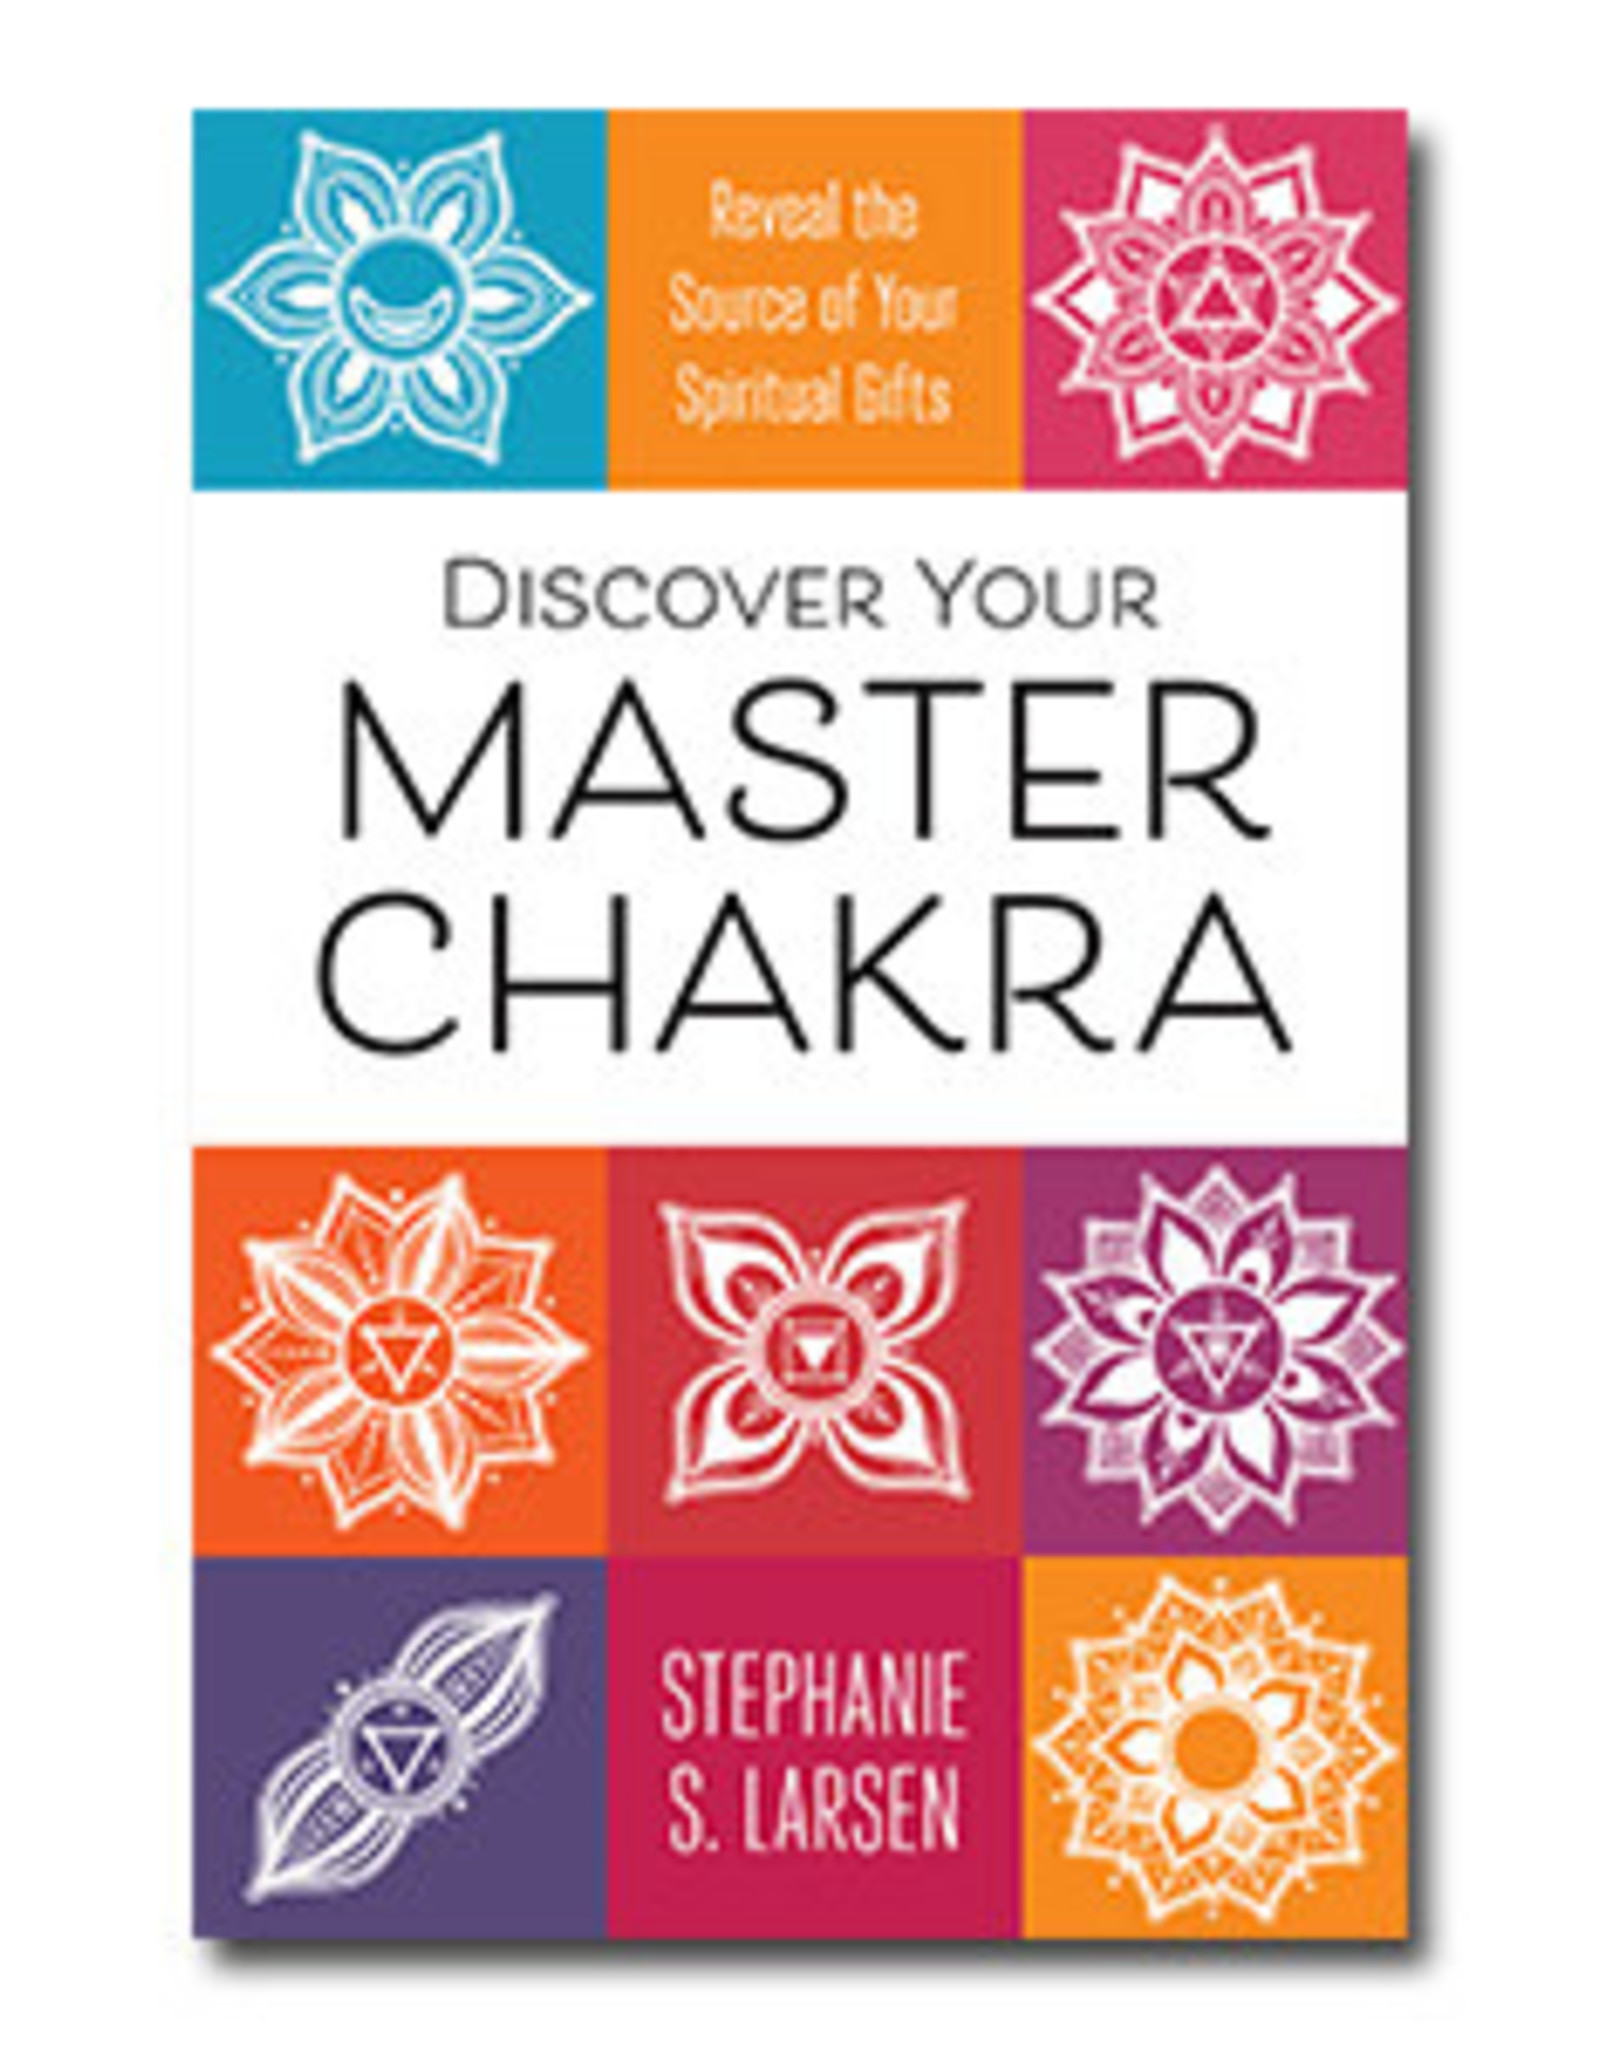 Stephanie S. Larsen Discover Your Master Chakra by Stephanie S. Larsen